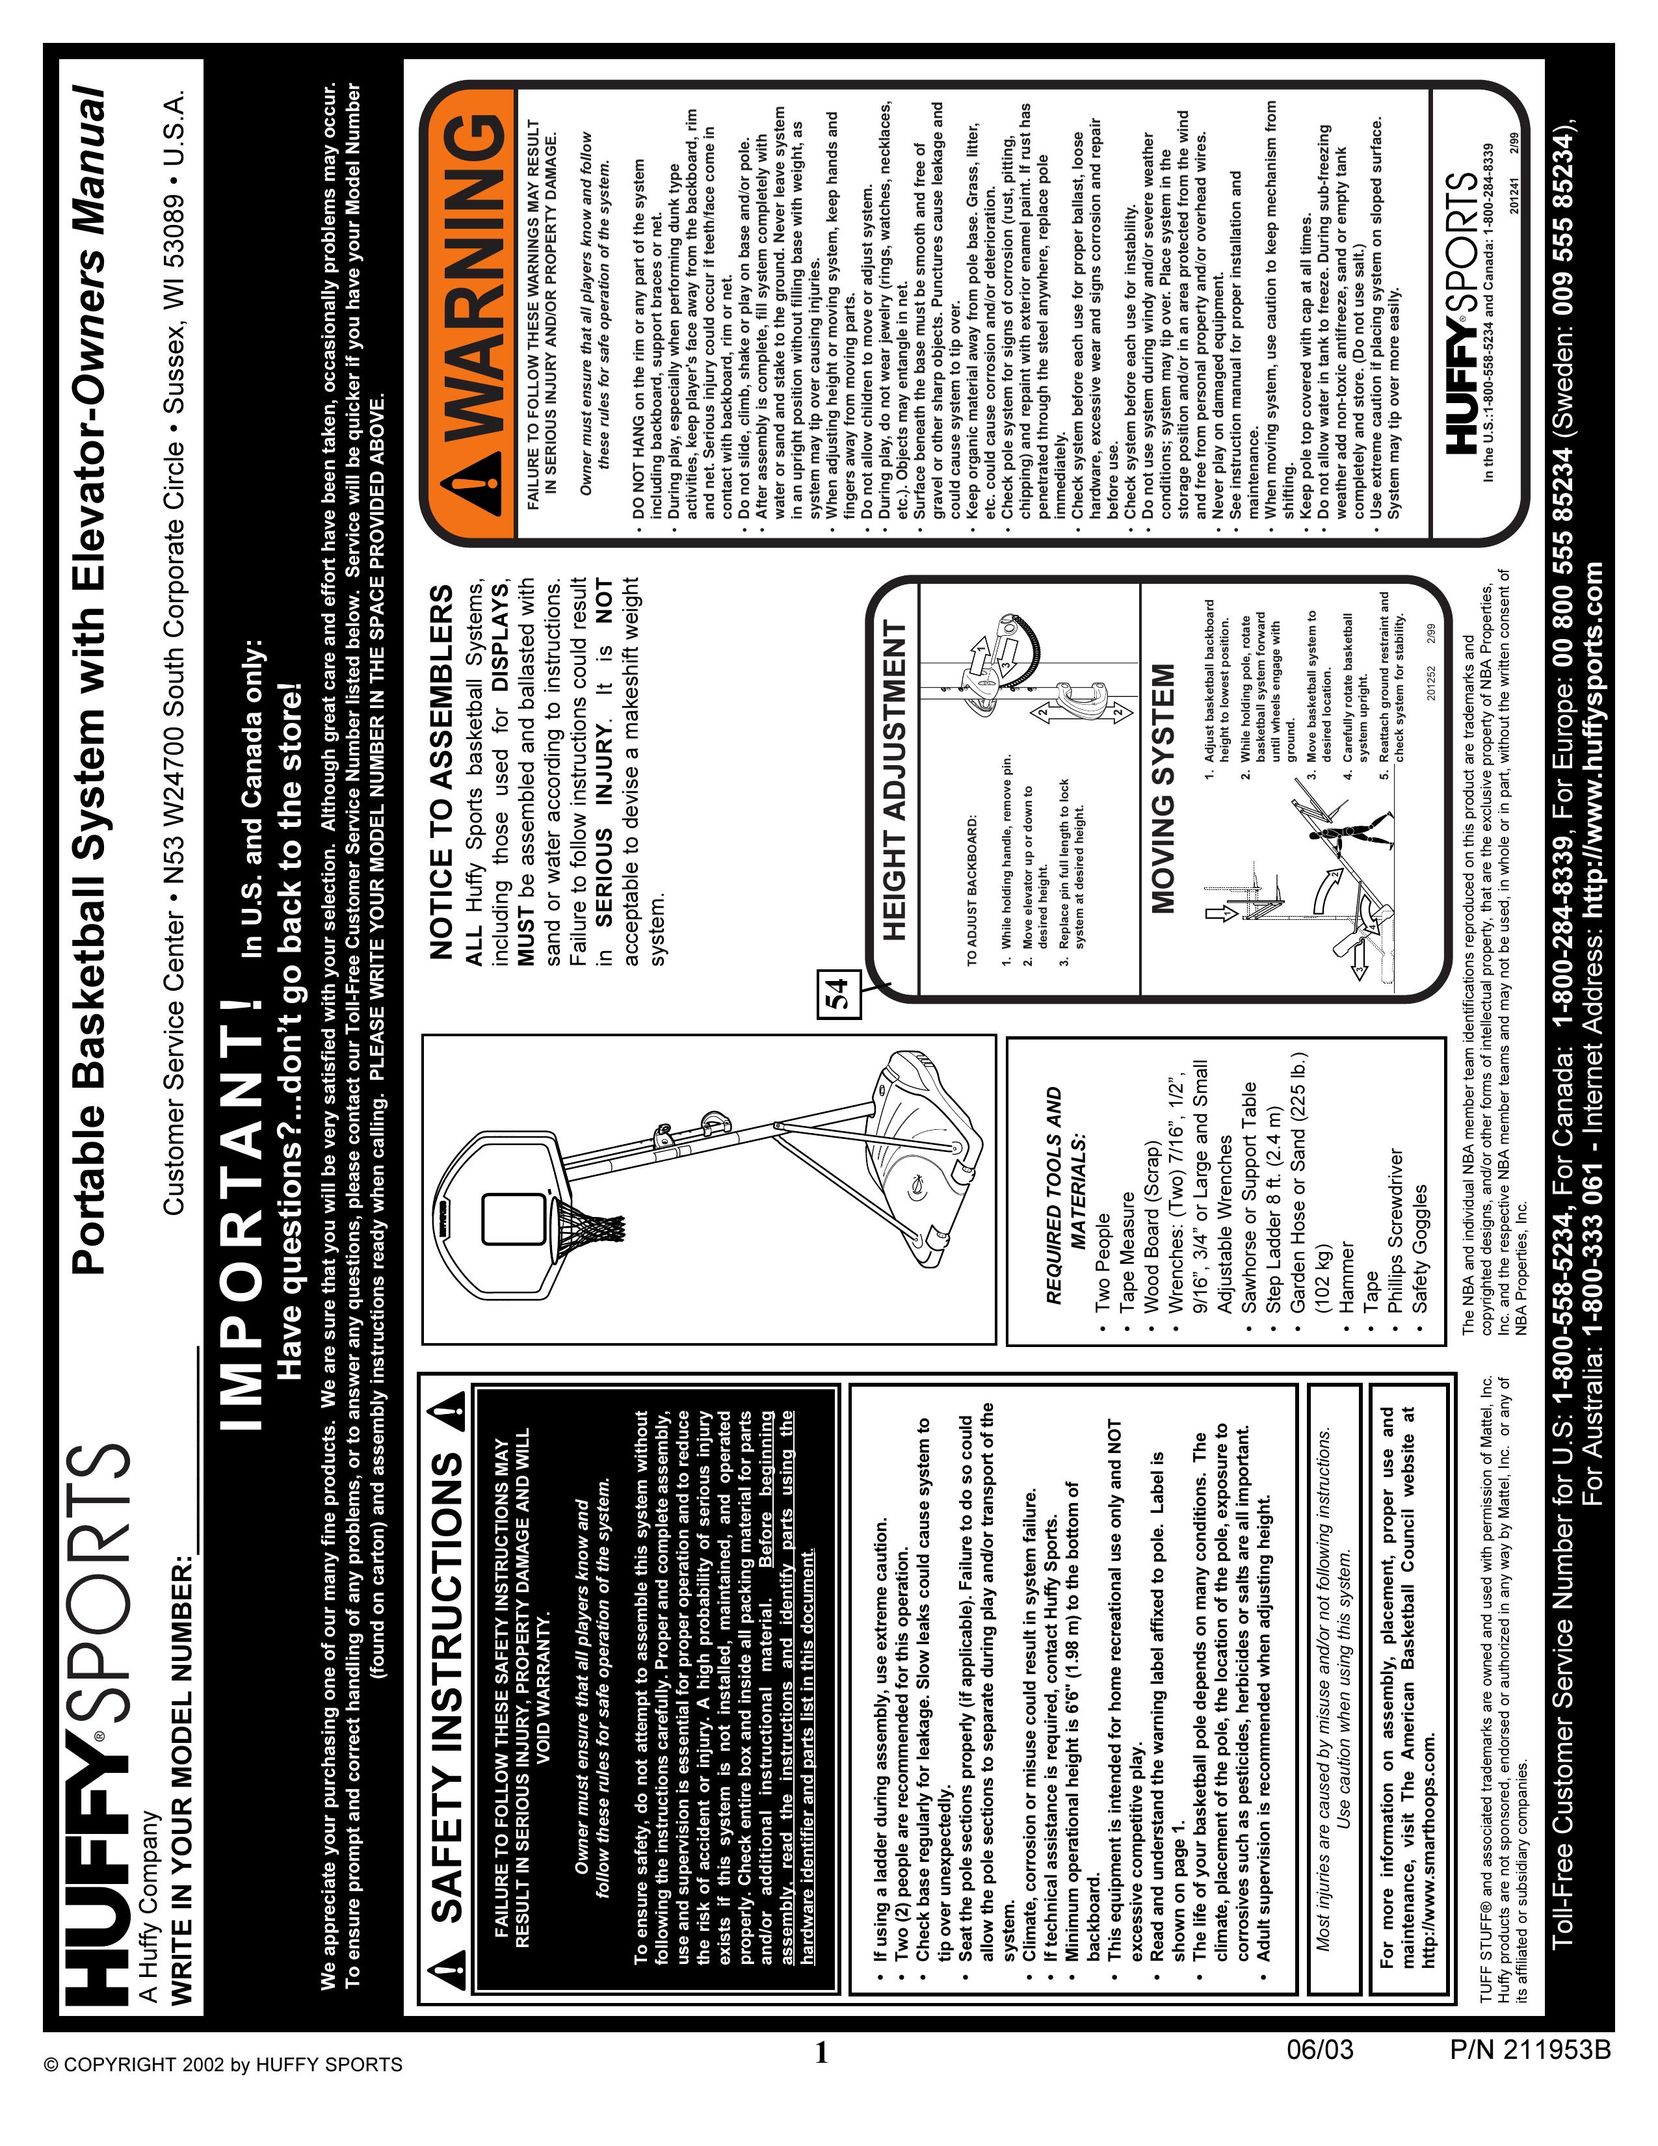 Huffy 111-500 Fitness Equipment User Manual